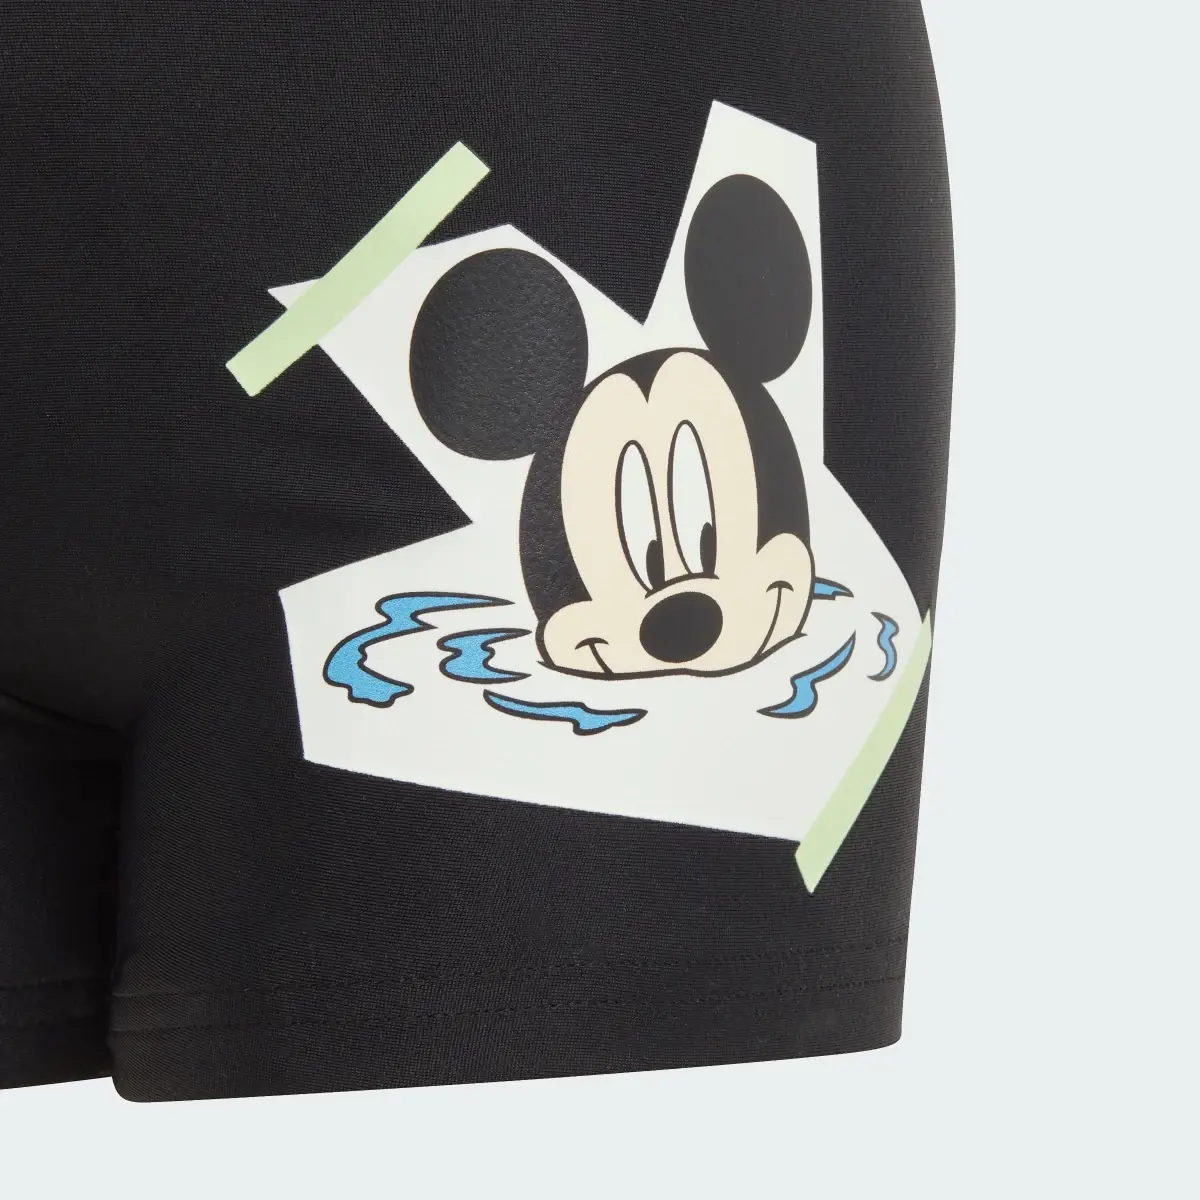 Adidas Boxers de Natação Mickey Vacation Memories adidas x Disney. 3